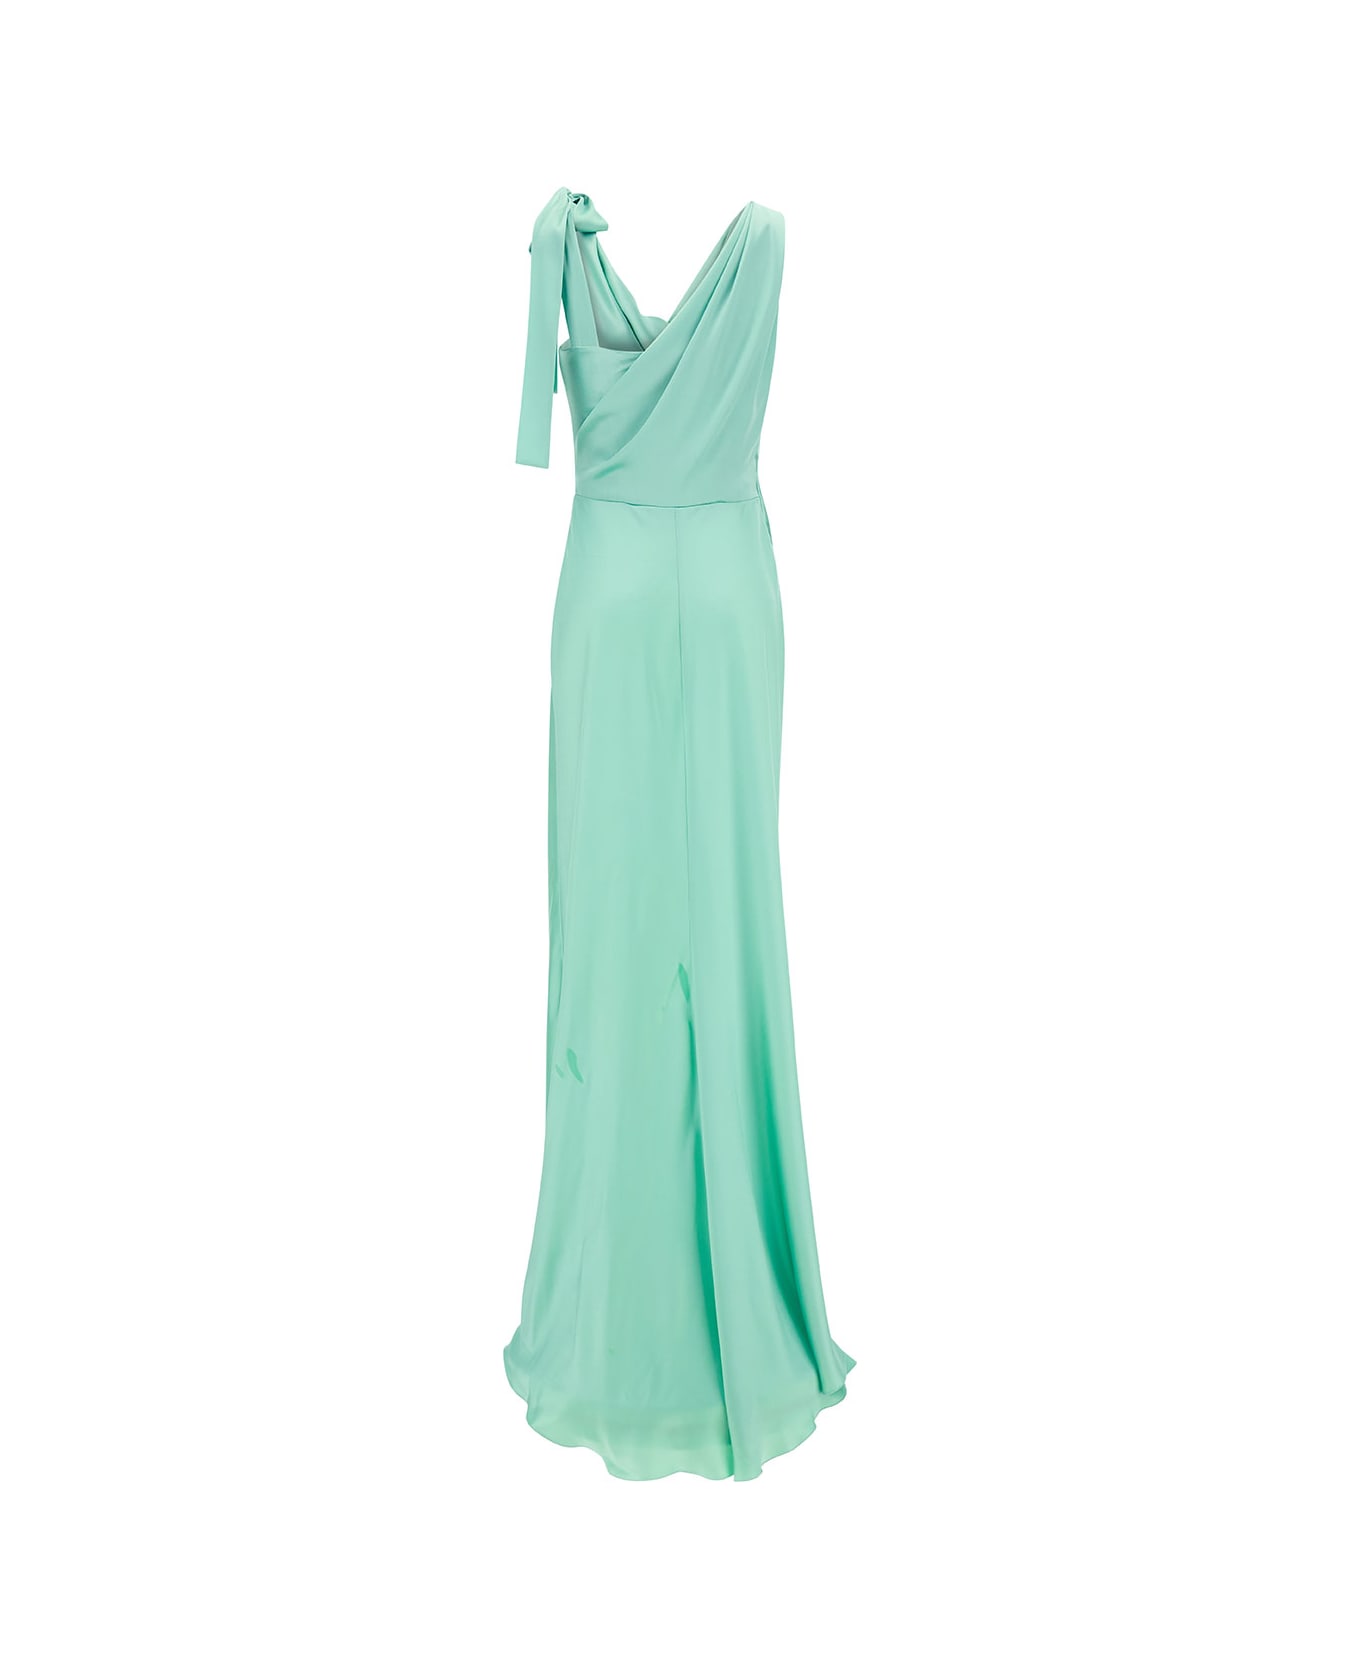 Alberta Ferretti Light Blue Long Draped Dress With V Neckline In Satin Woman - Light blue